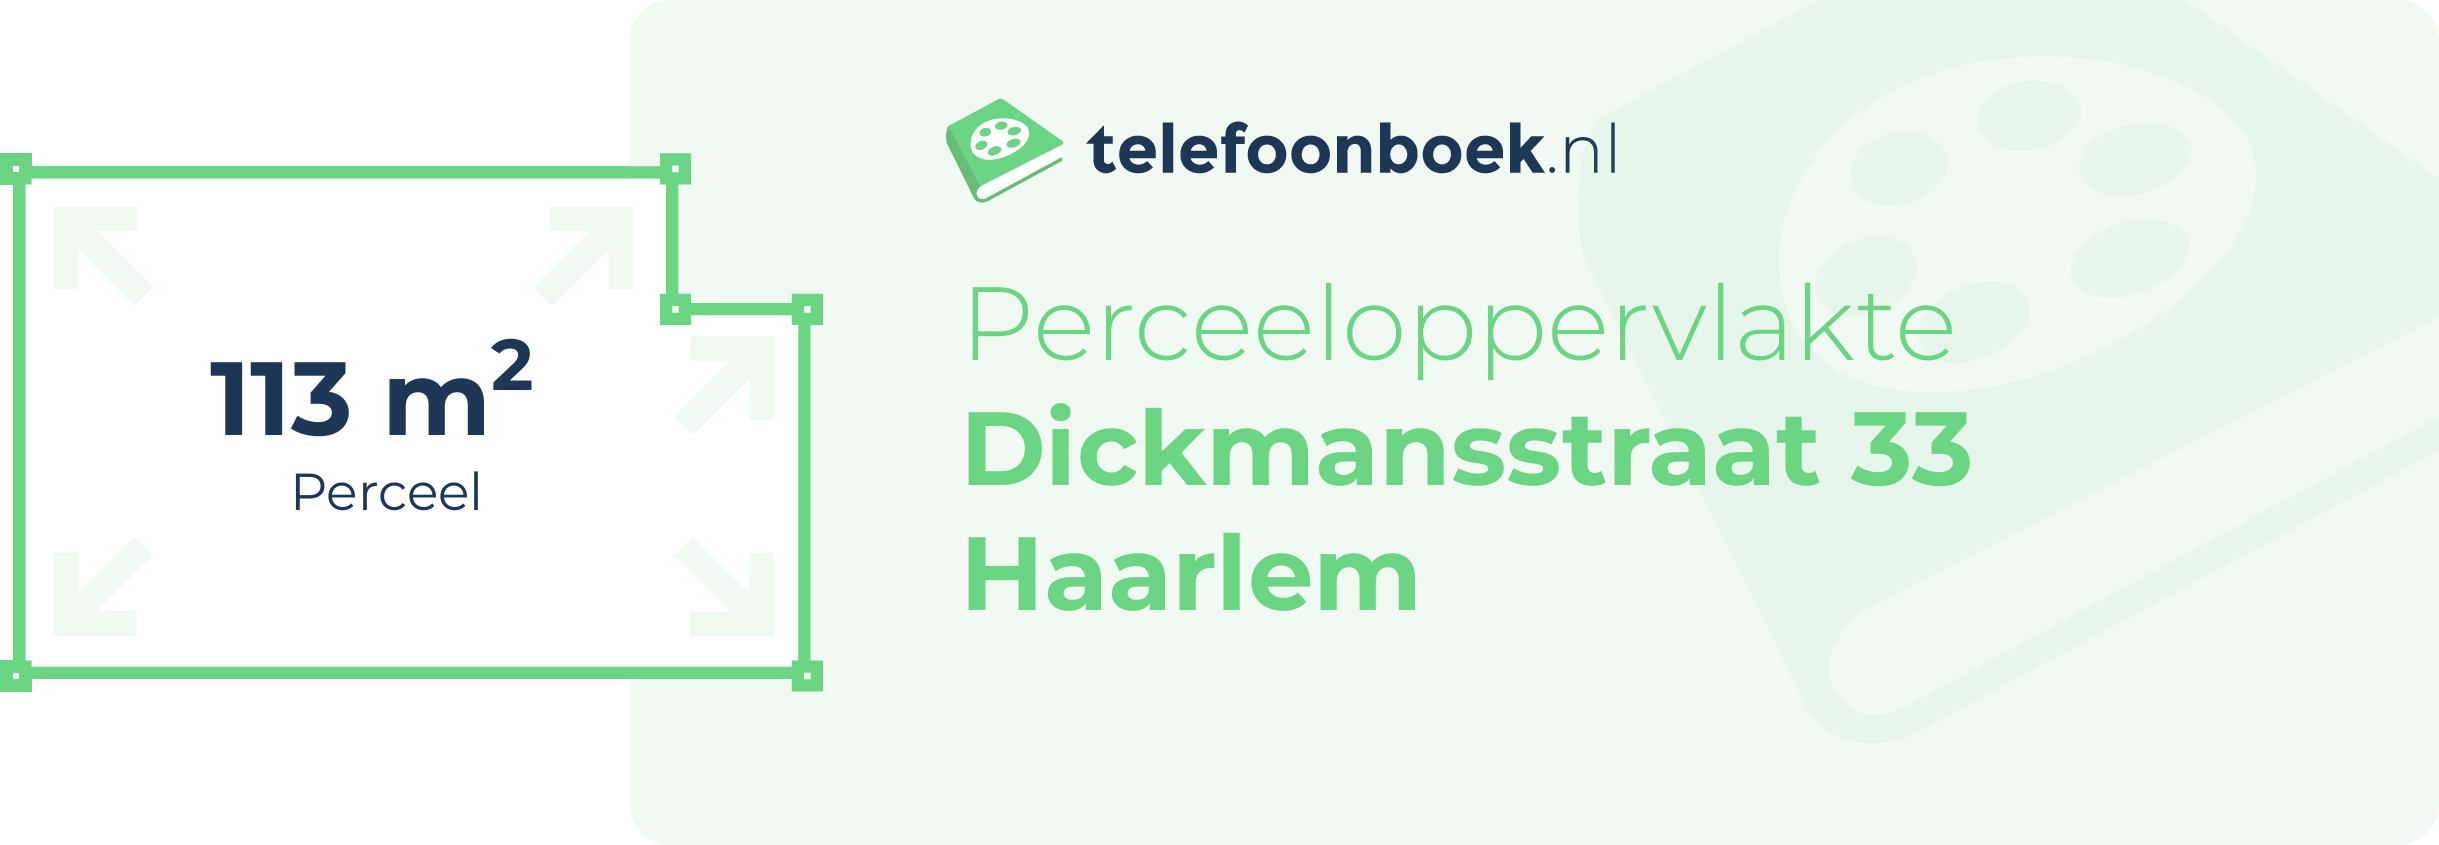 Perceeloppervlakte Dickmansstraat 33 Haarlem